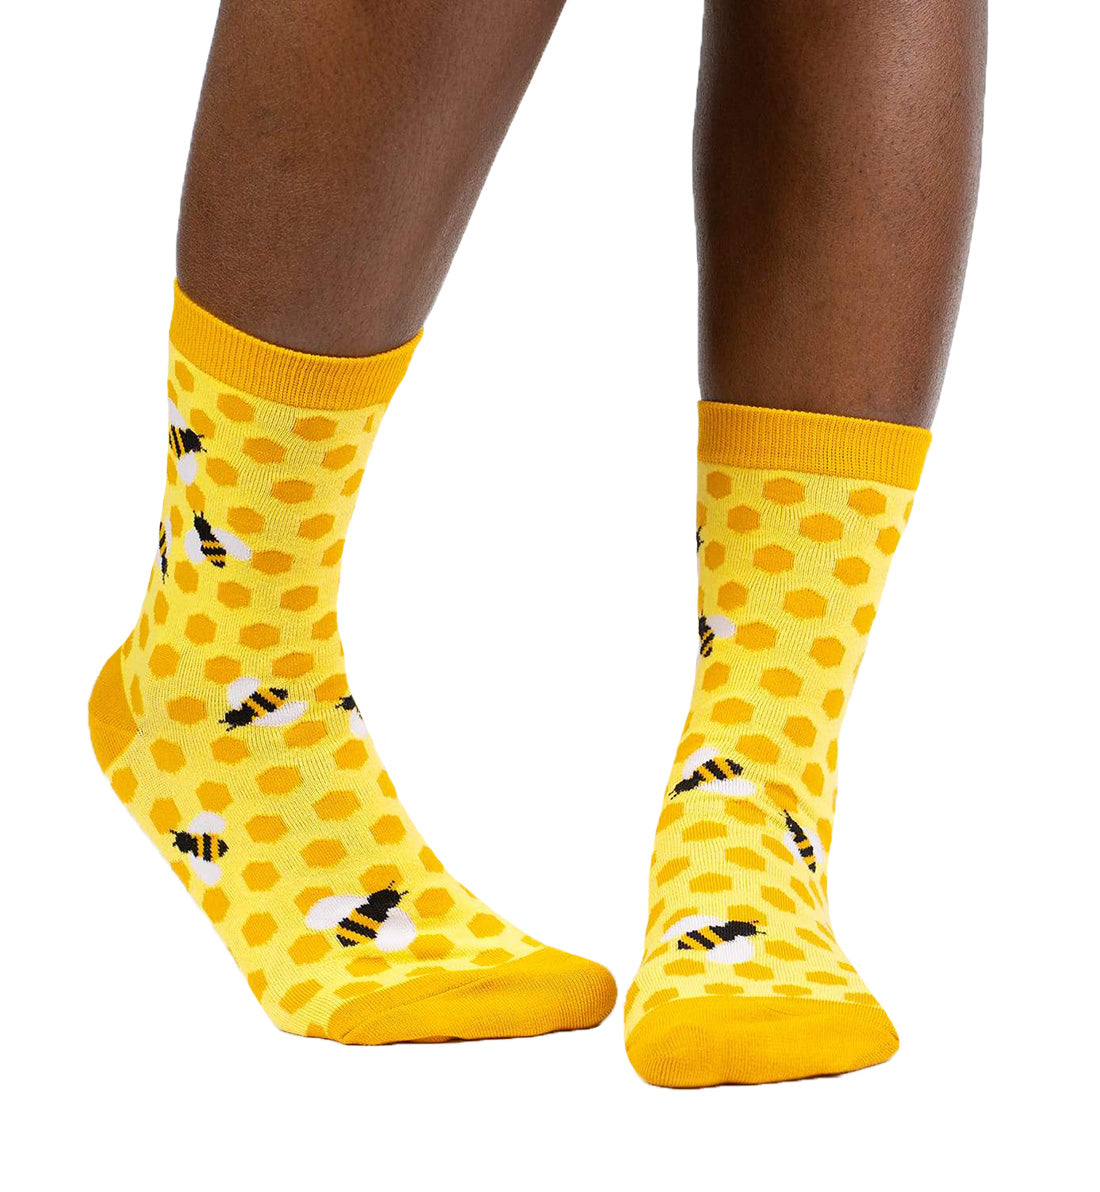 SOCK it to me Women's Crew Socks (w0337)- Bee's Knees - Bee's Knees,One Size